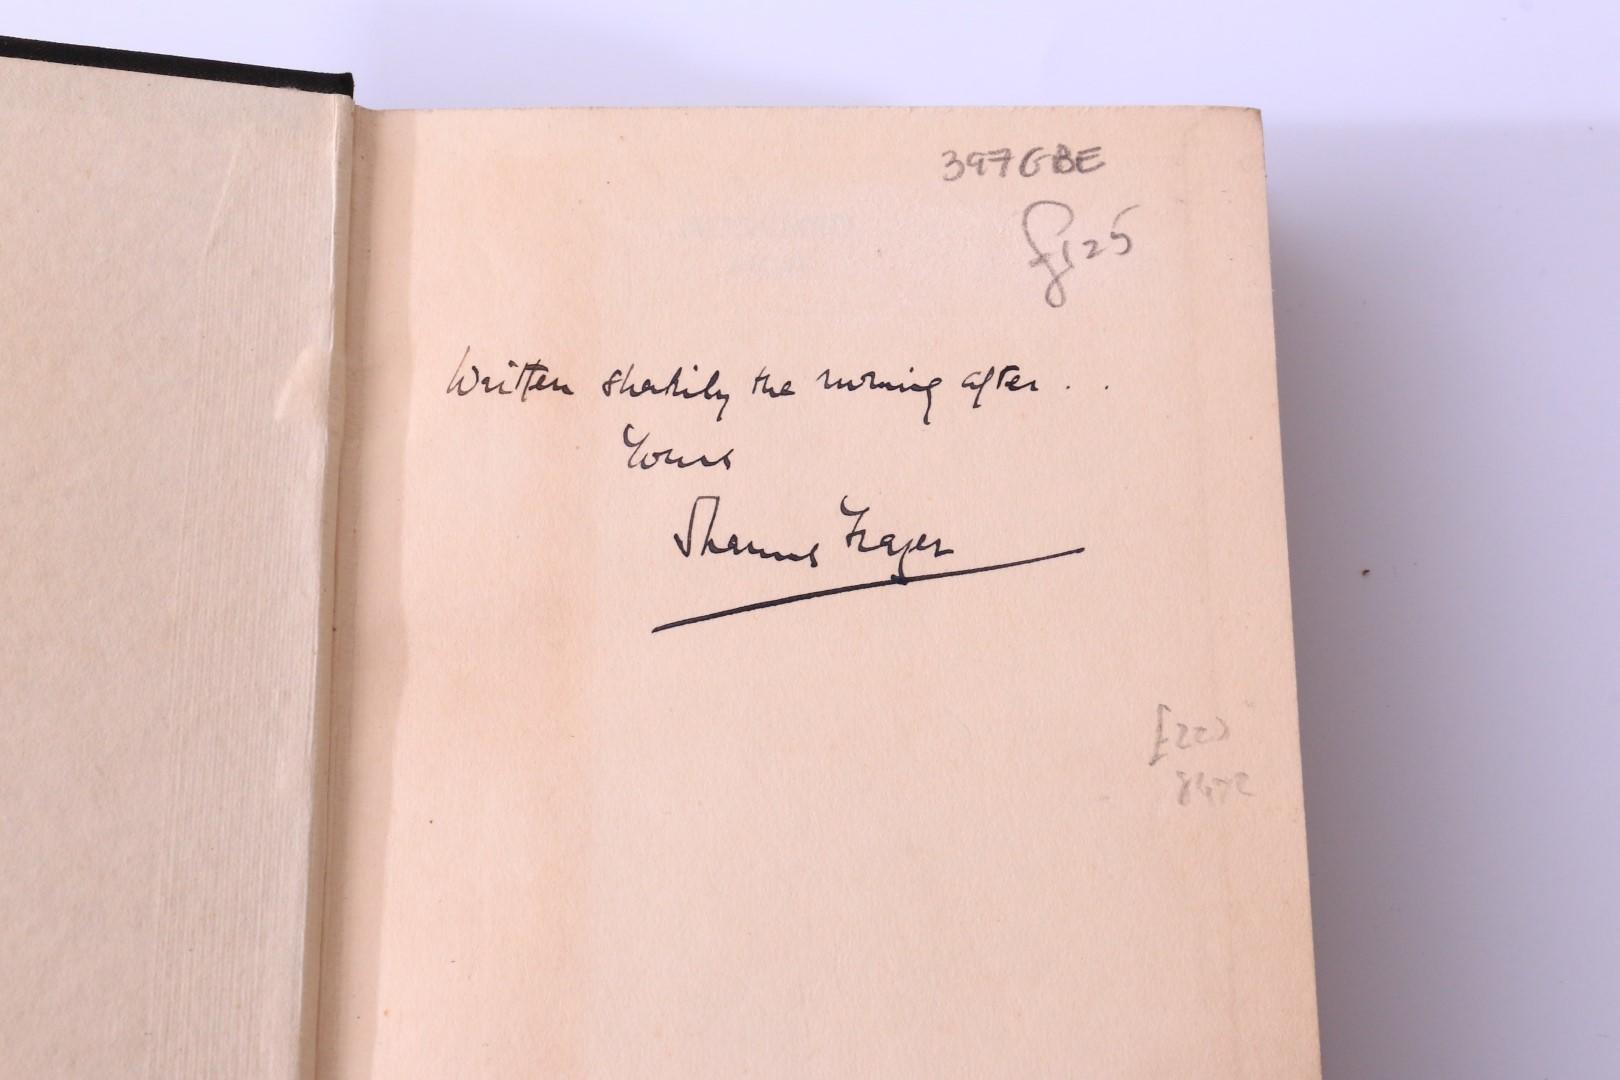 Shamus Frazer - Acorned Hog - Chapman & Hall, 1933, Signed First Edition.